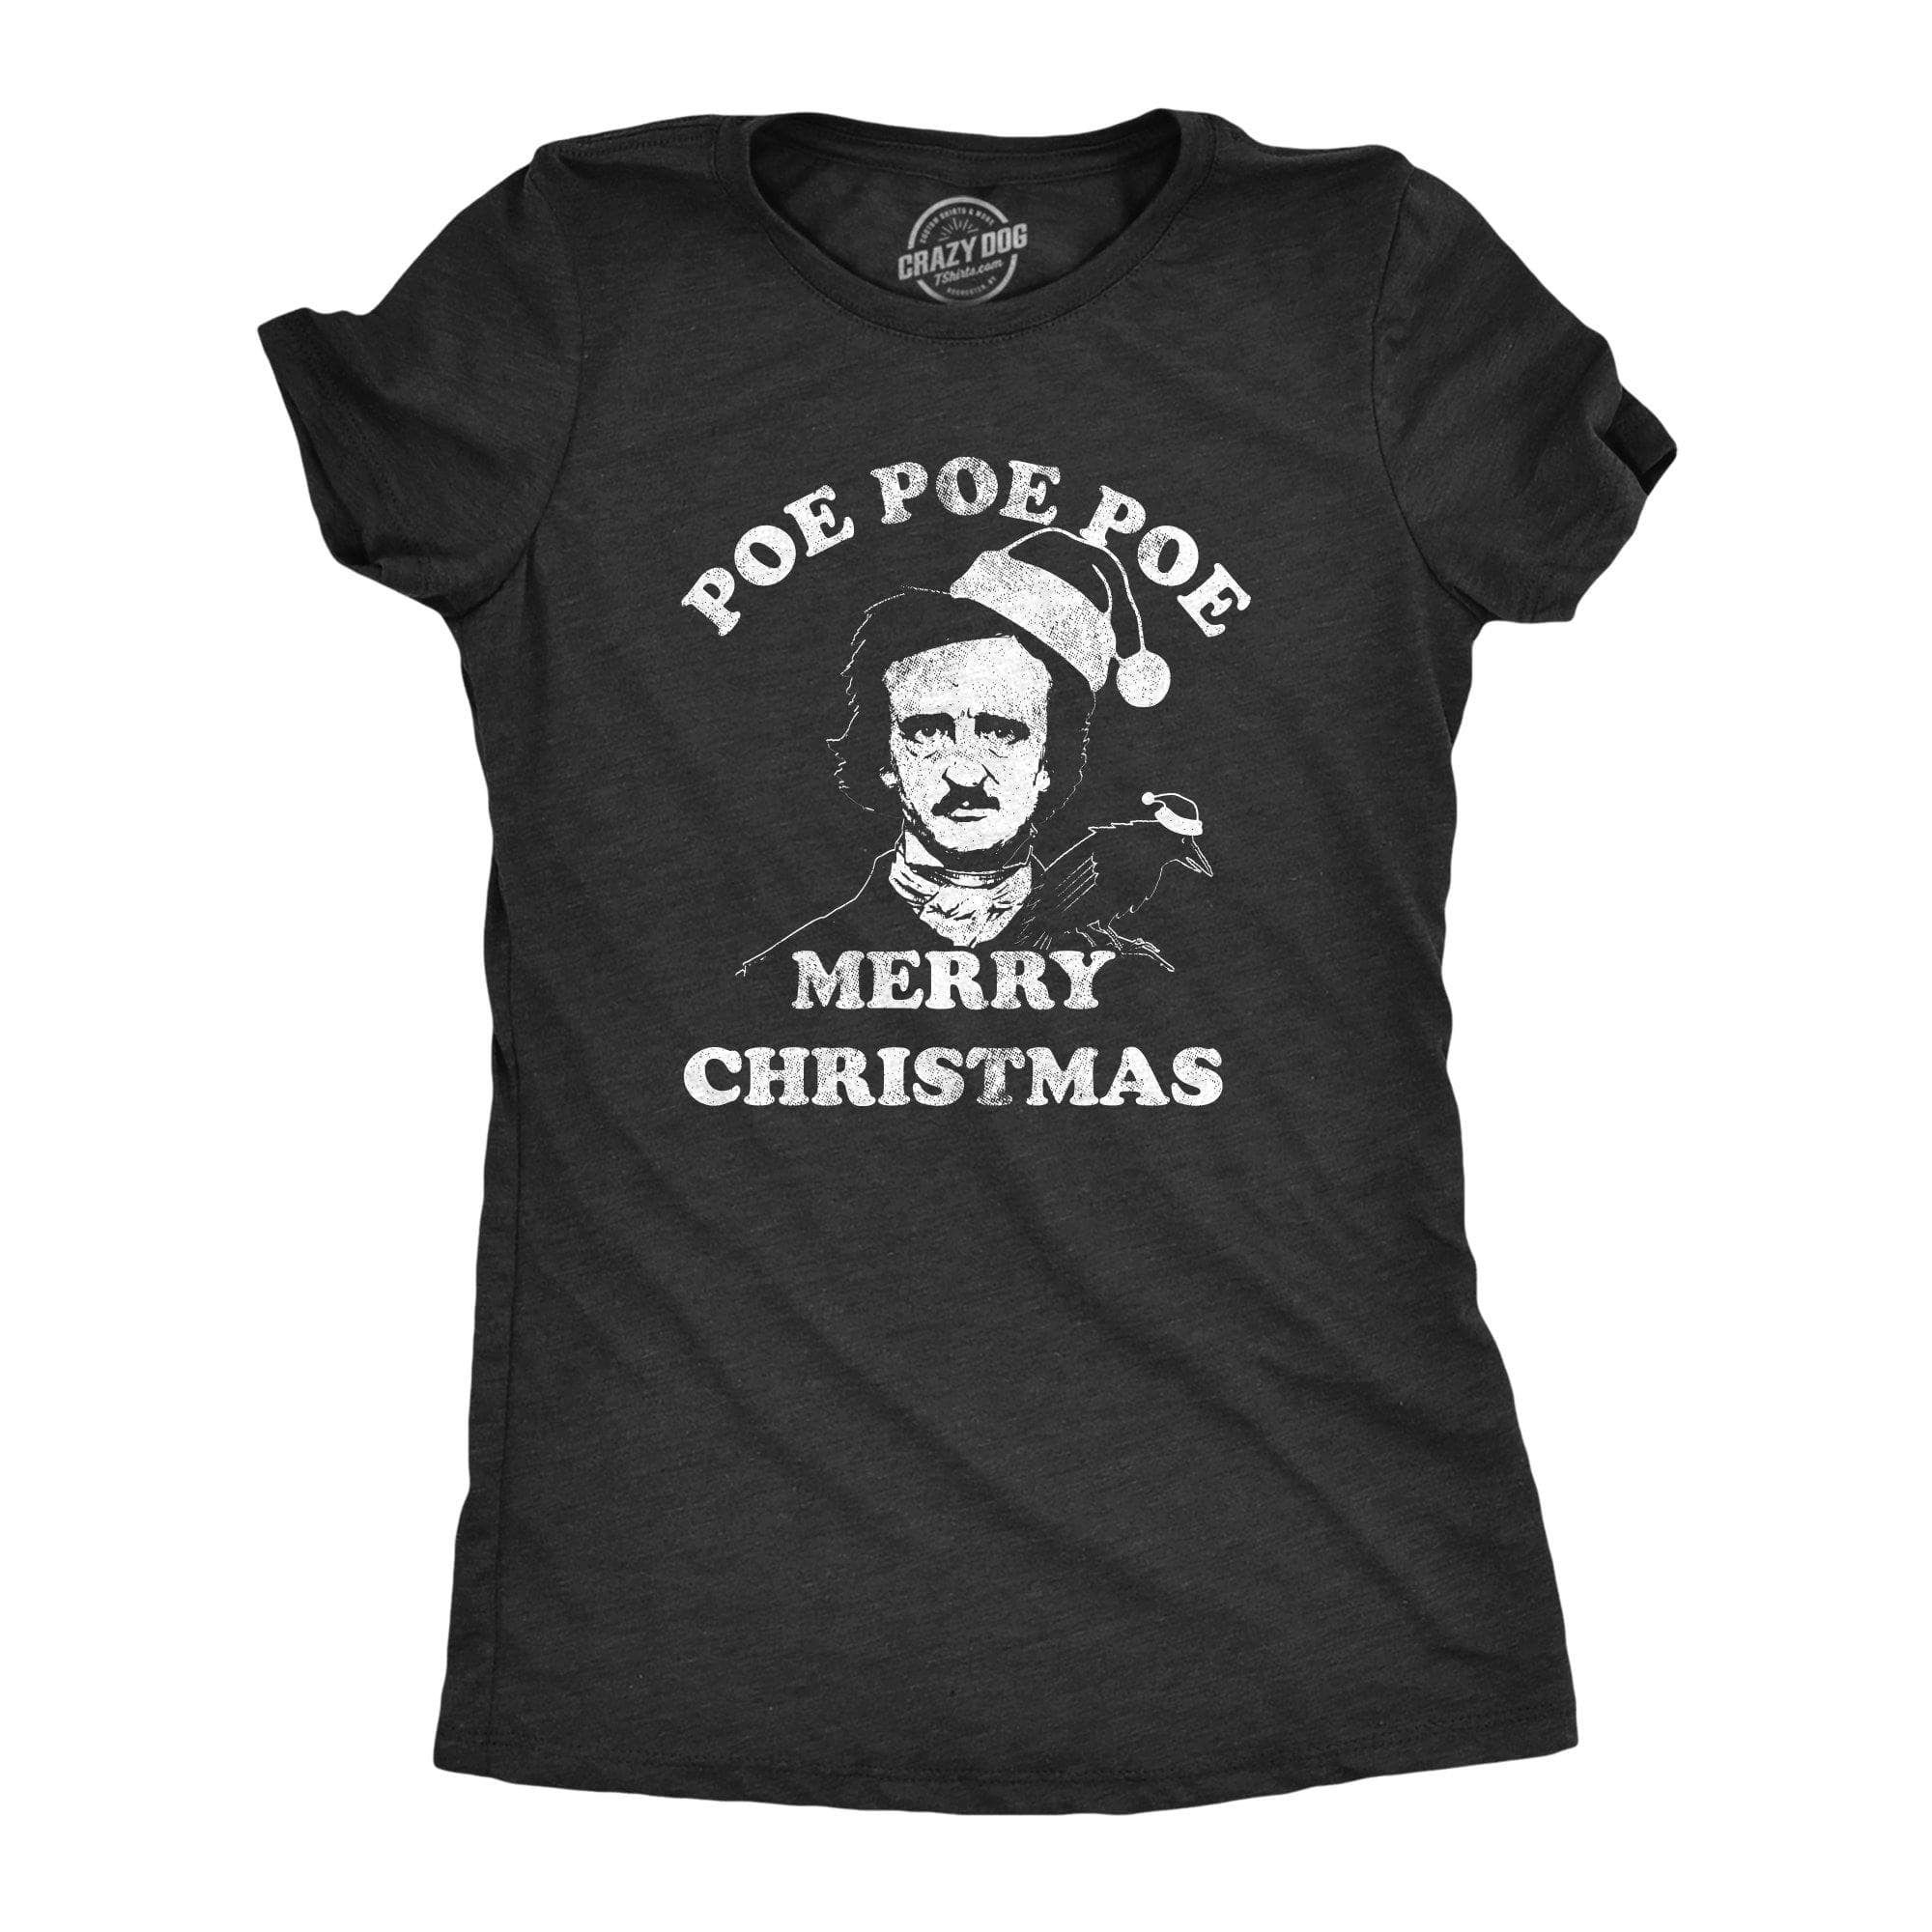 Poe Poe Poe Merry Christmas Women's Tshirt - Crazy Dog T-Shirts